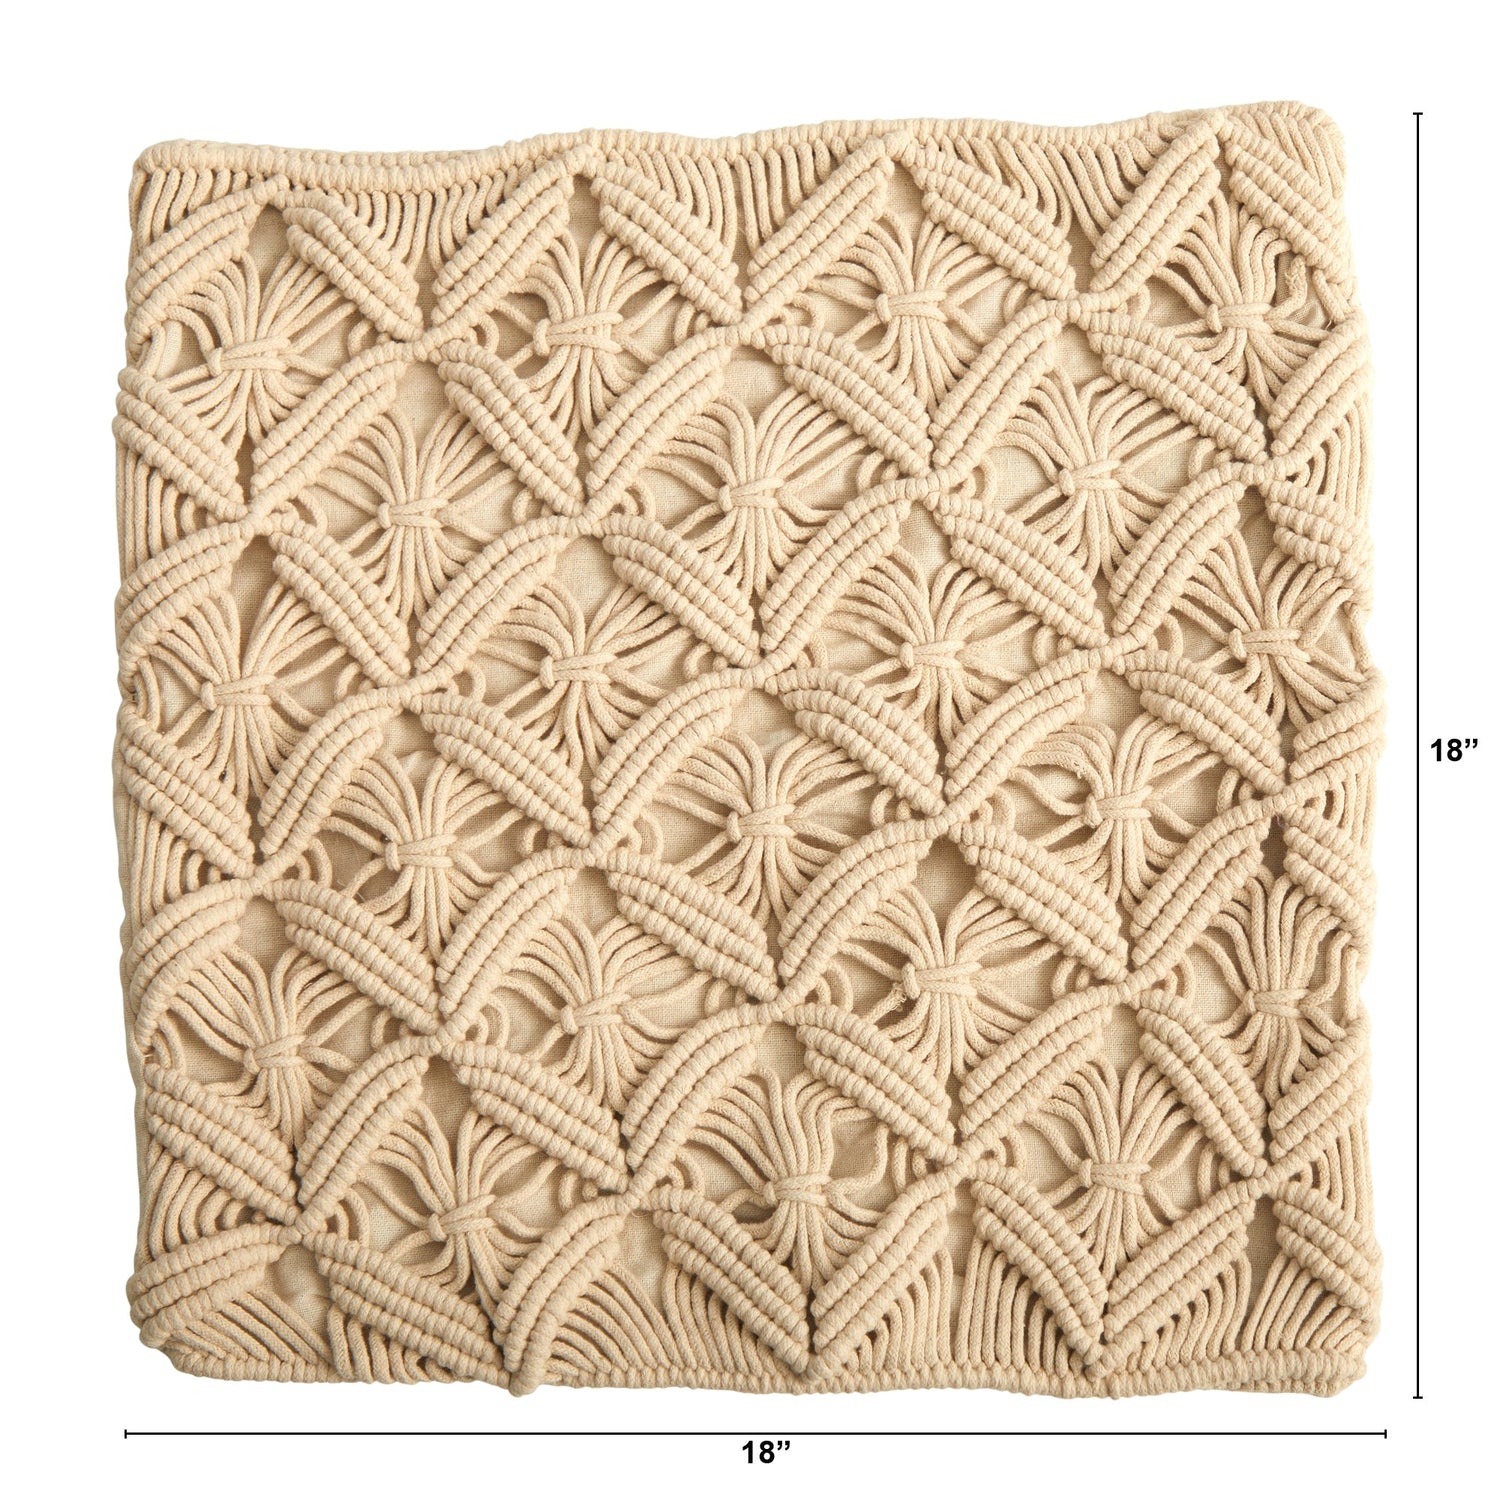 18” Boho Diamond Woven Macrame Decorative Pillow Cover